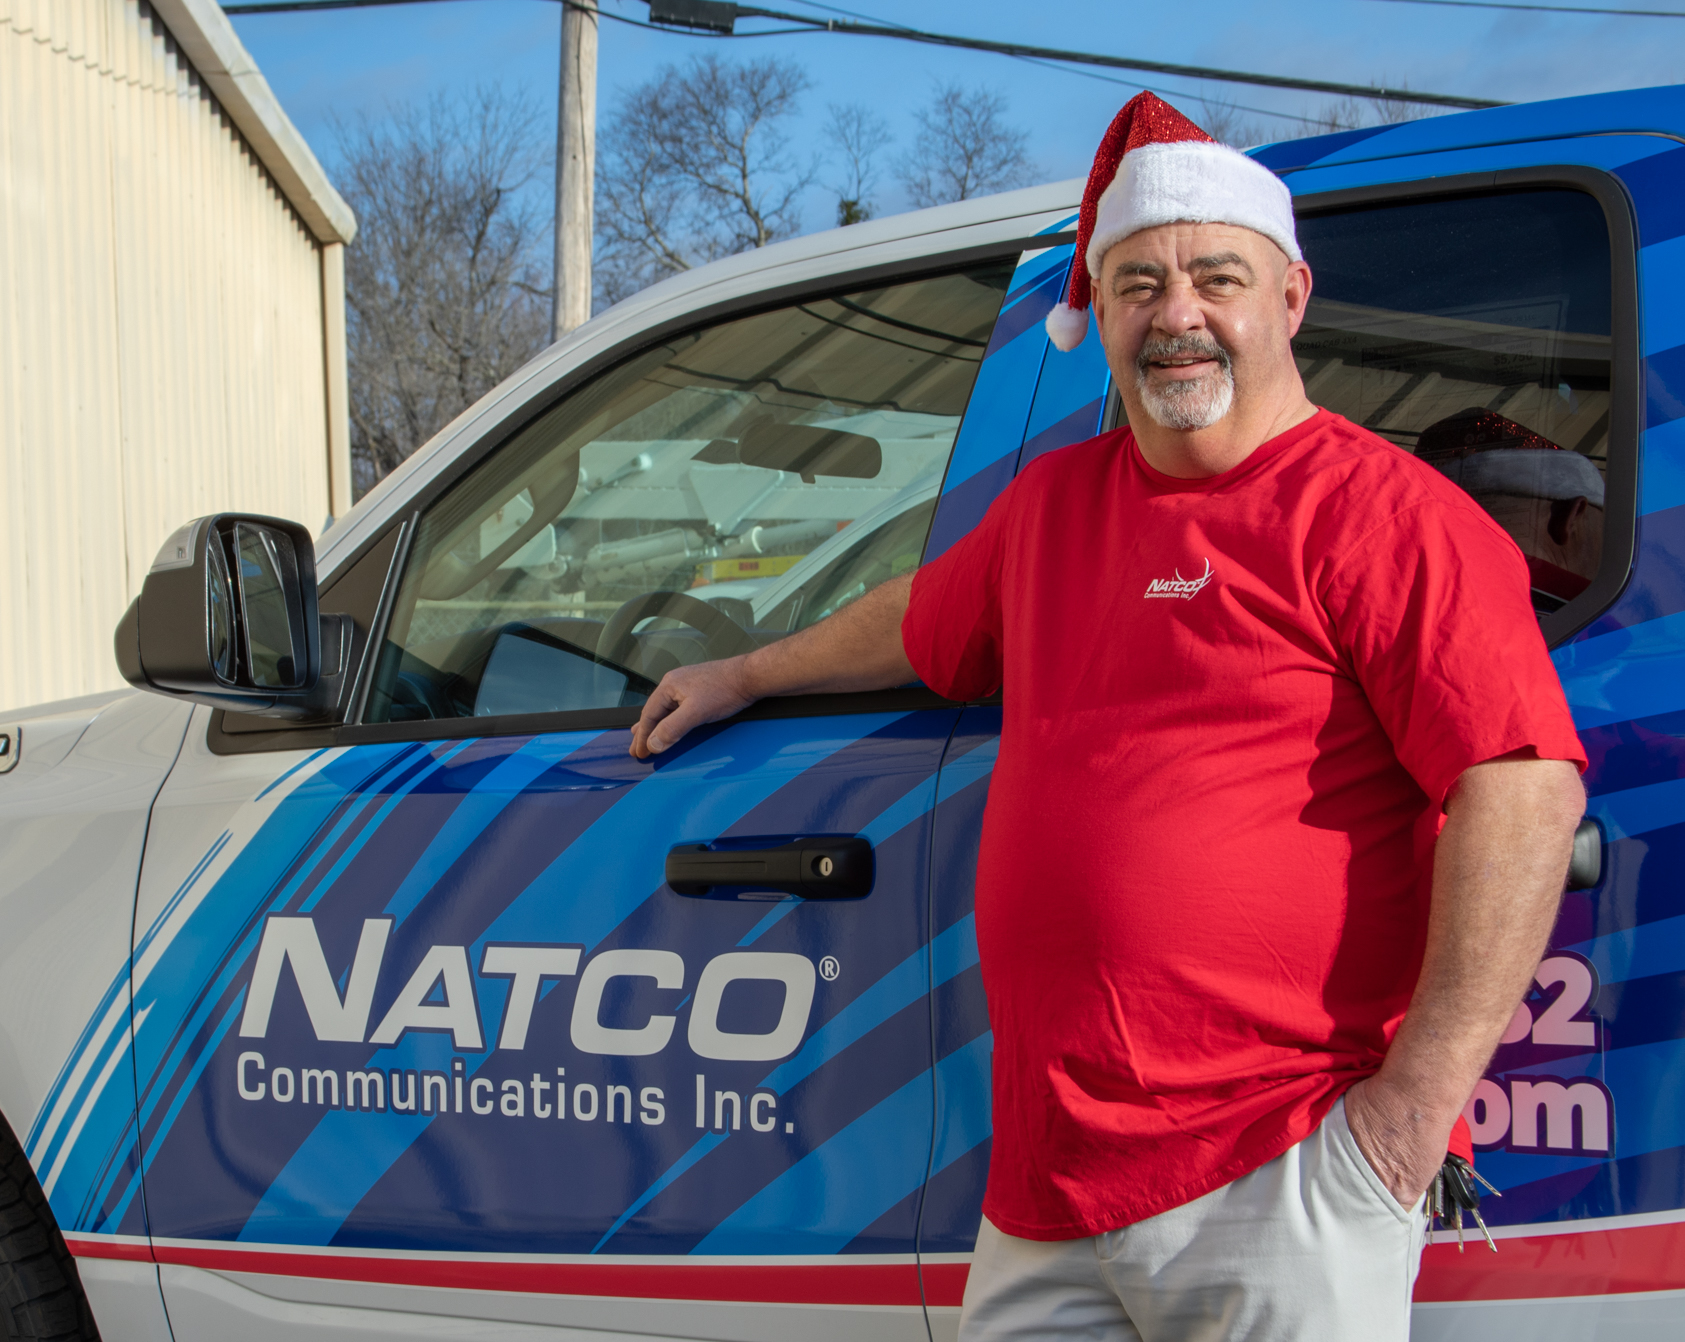 NATCO Director of Customer Care Tim McEuen stands next to a NATCO truck in a Santa hat